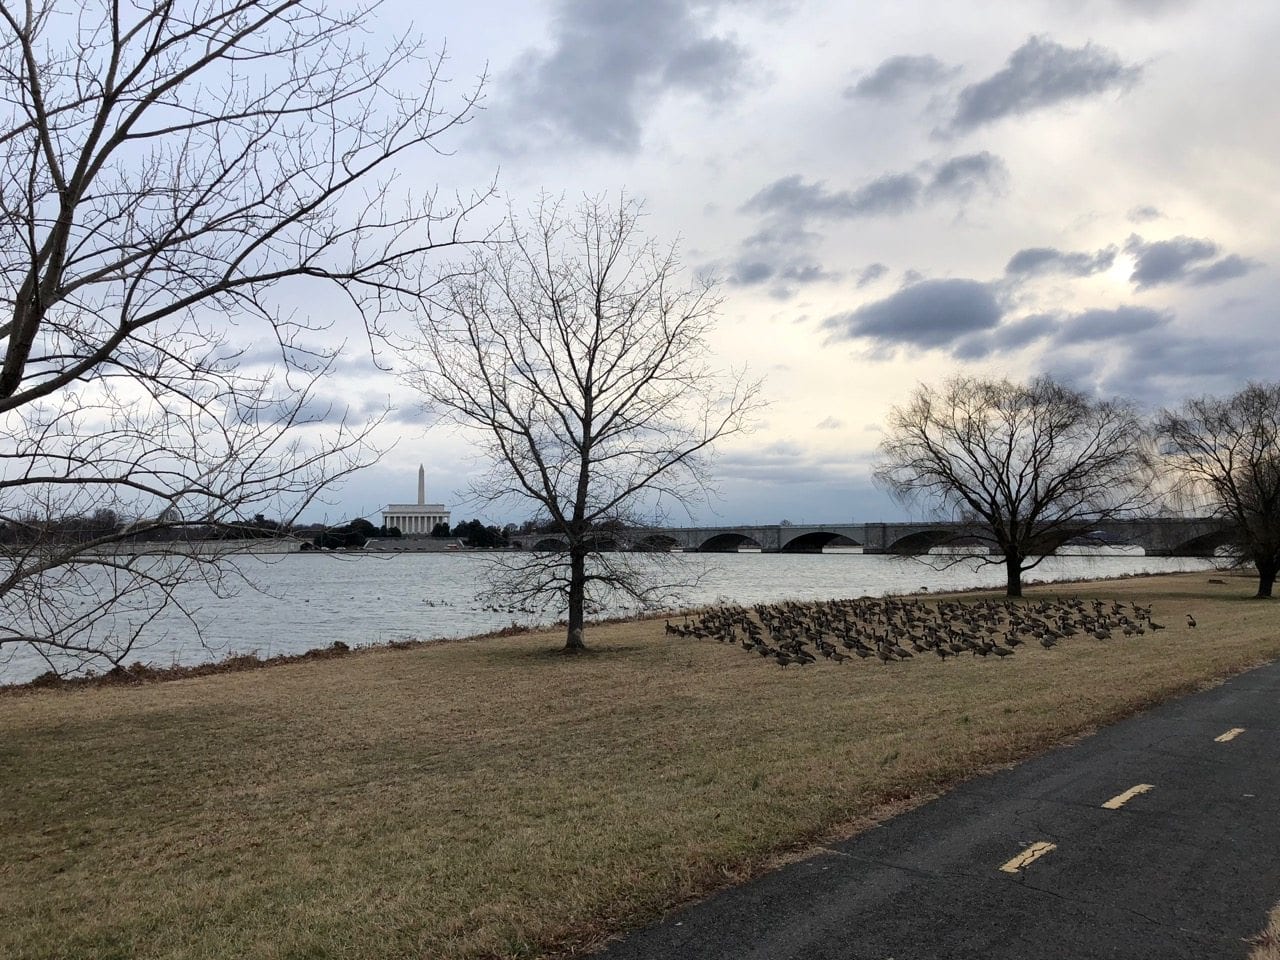 View from Arlington across the Potomac to the Washington Monument